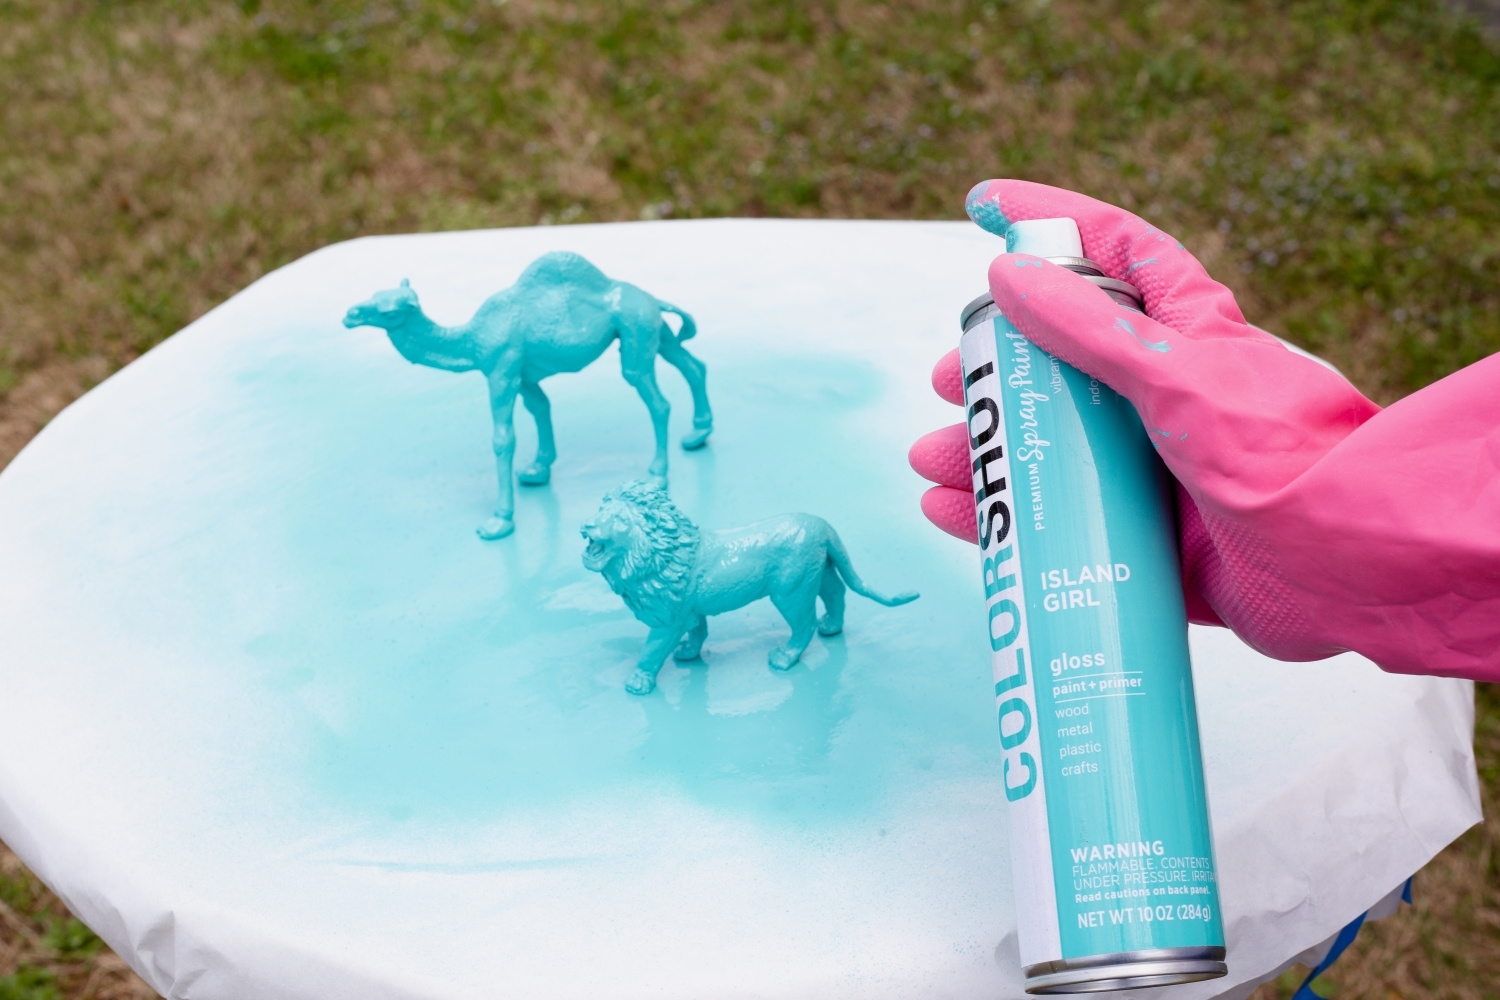 Spray paint each toy animal